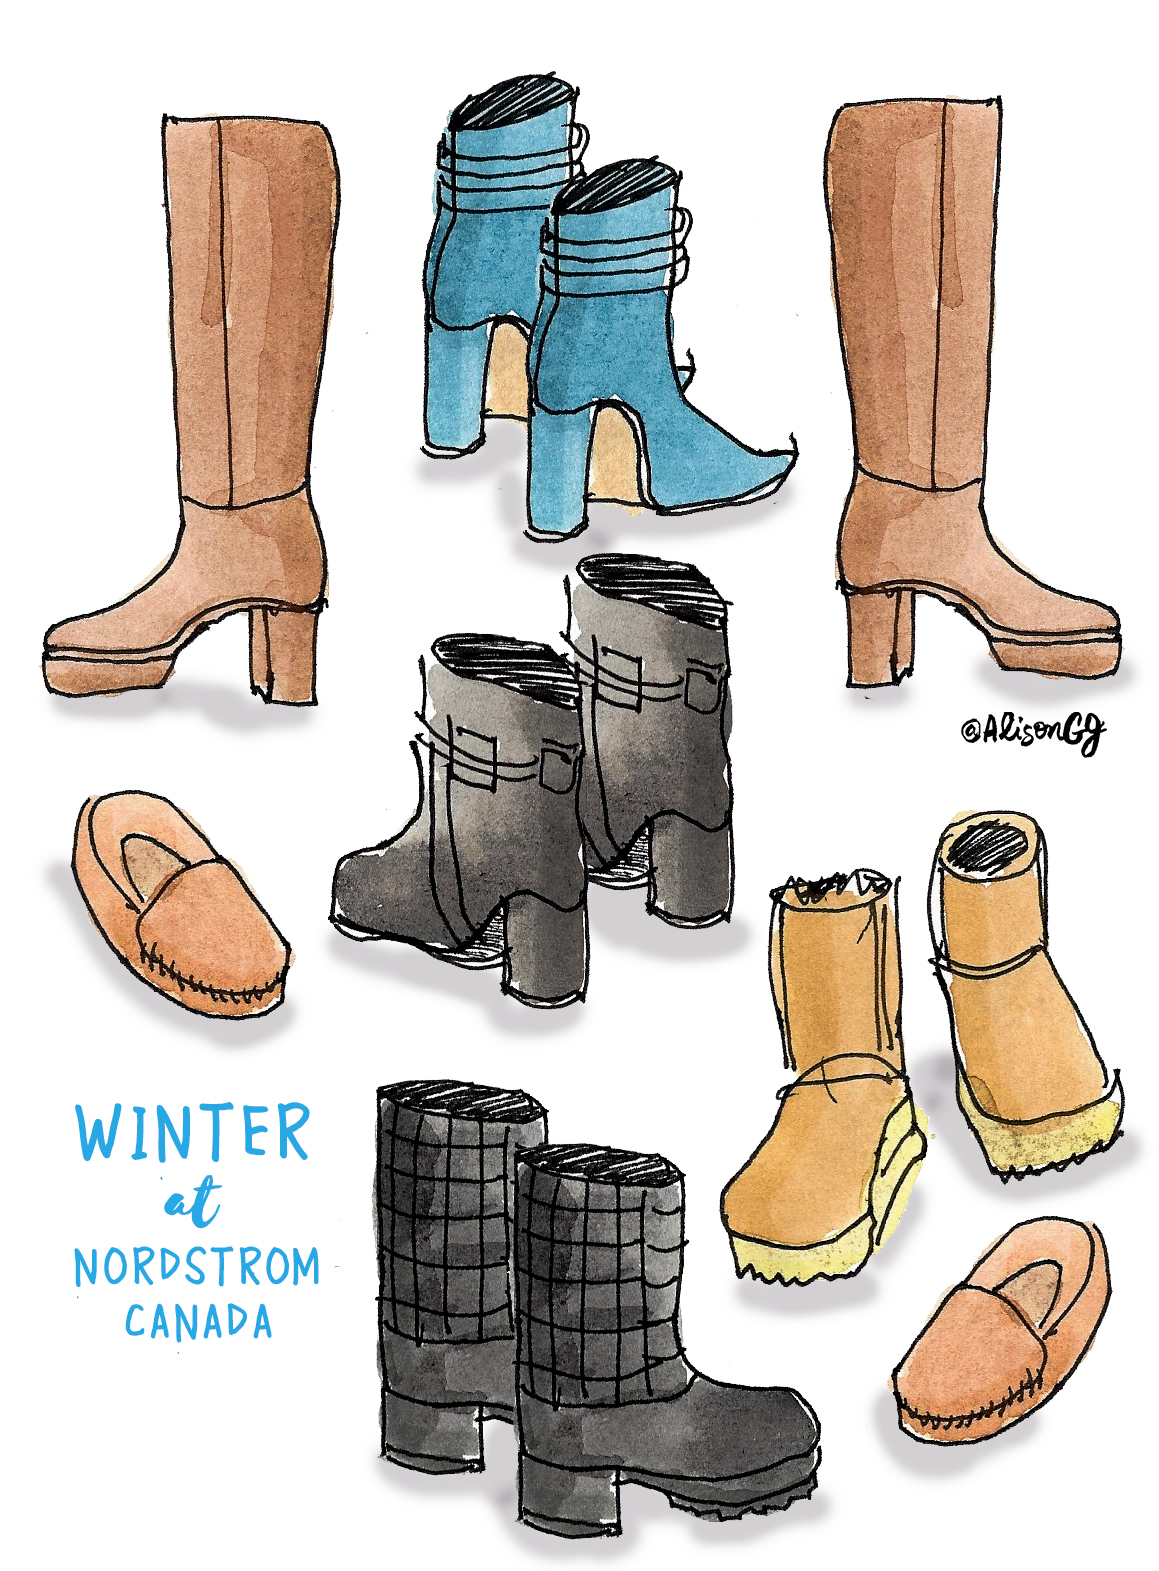 Nordstrom Canada Winter Boots by Alison Garwood-Jones